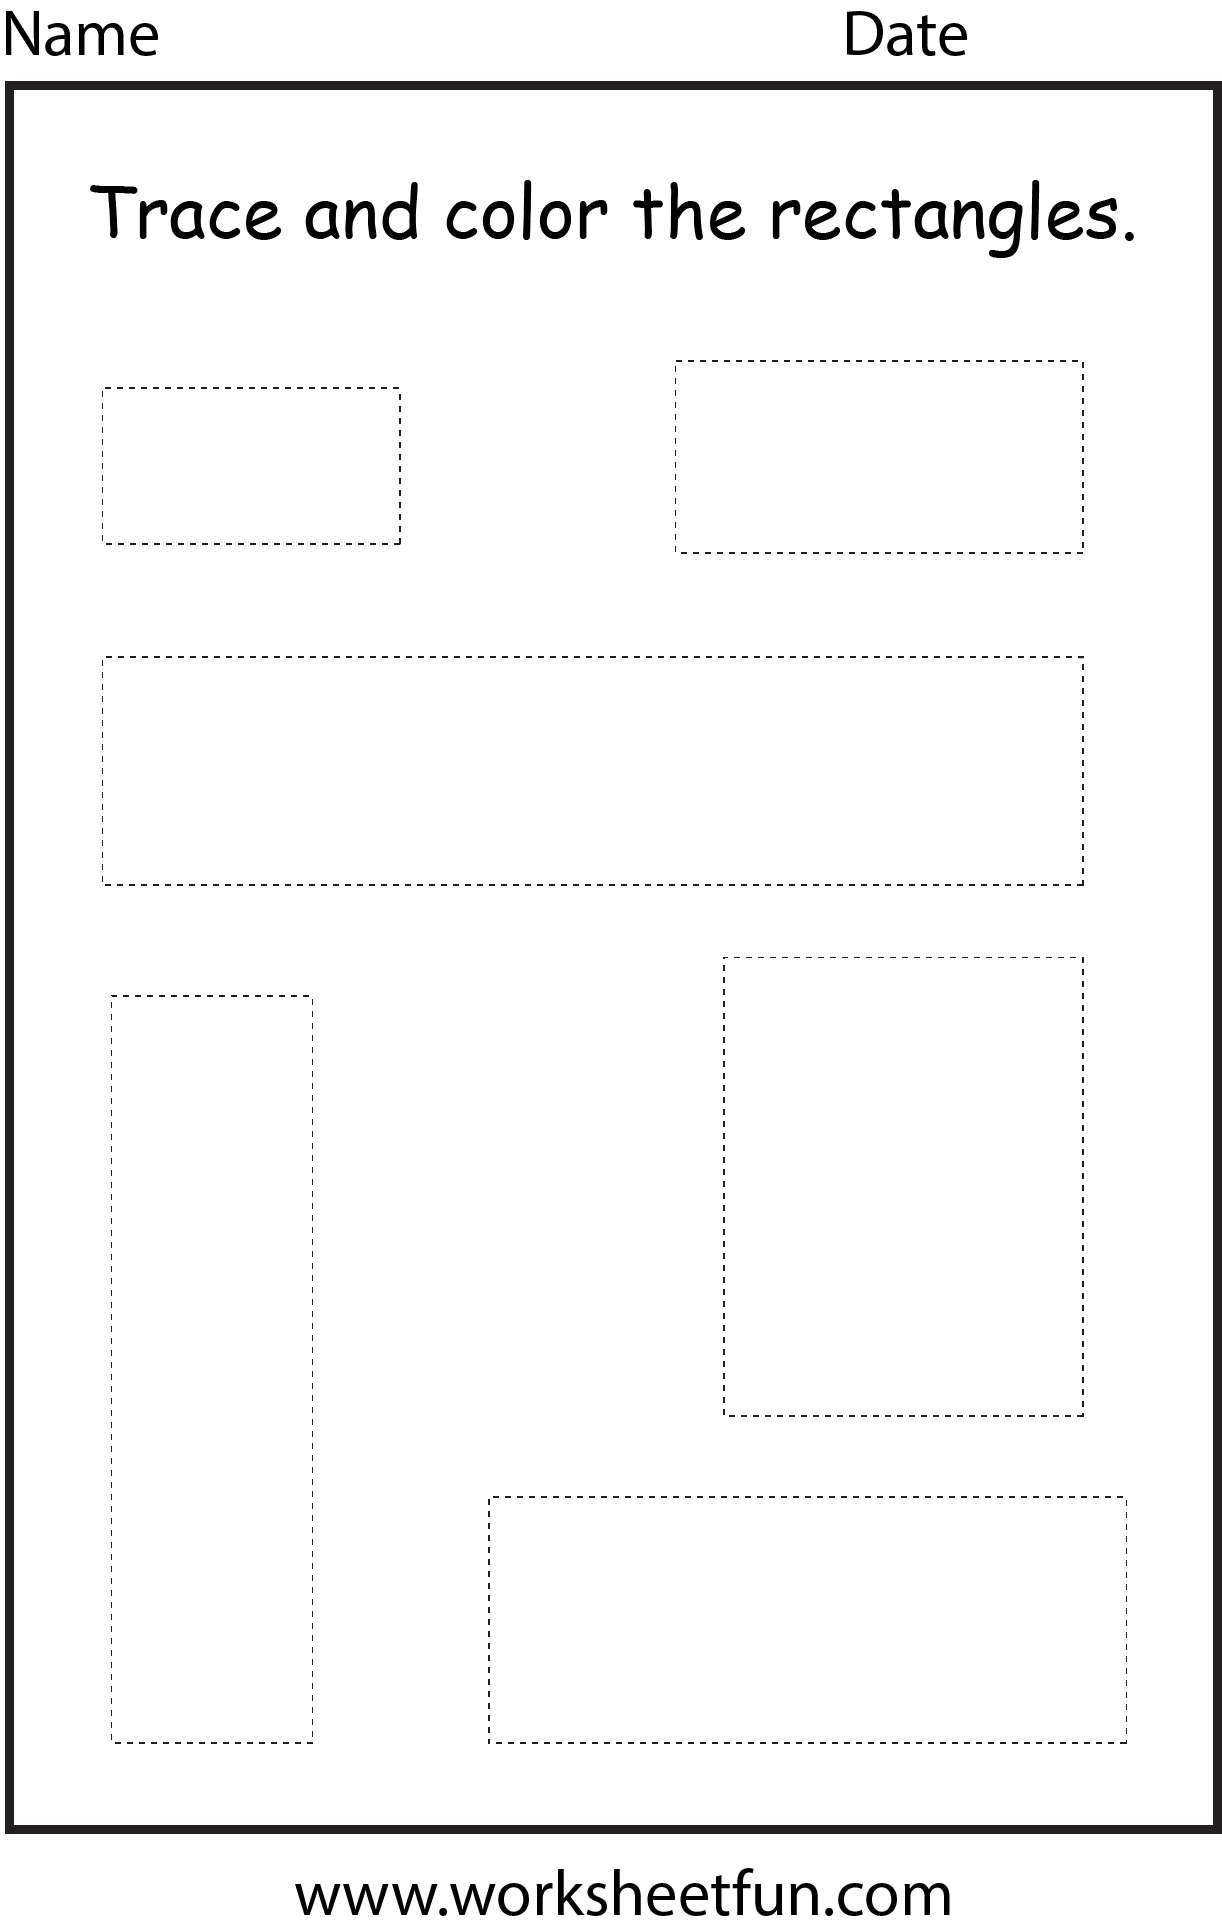 Shape Tracing Rectangle 1 Worksheet FREE Printable Worksheets Worksheetfun